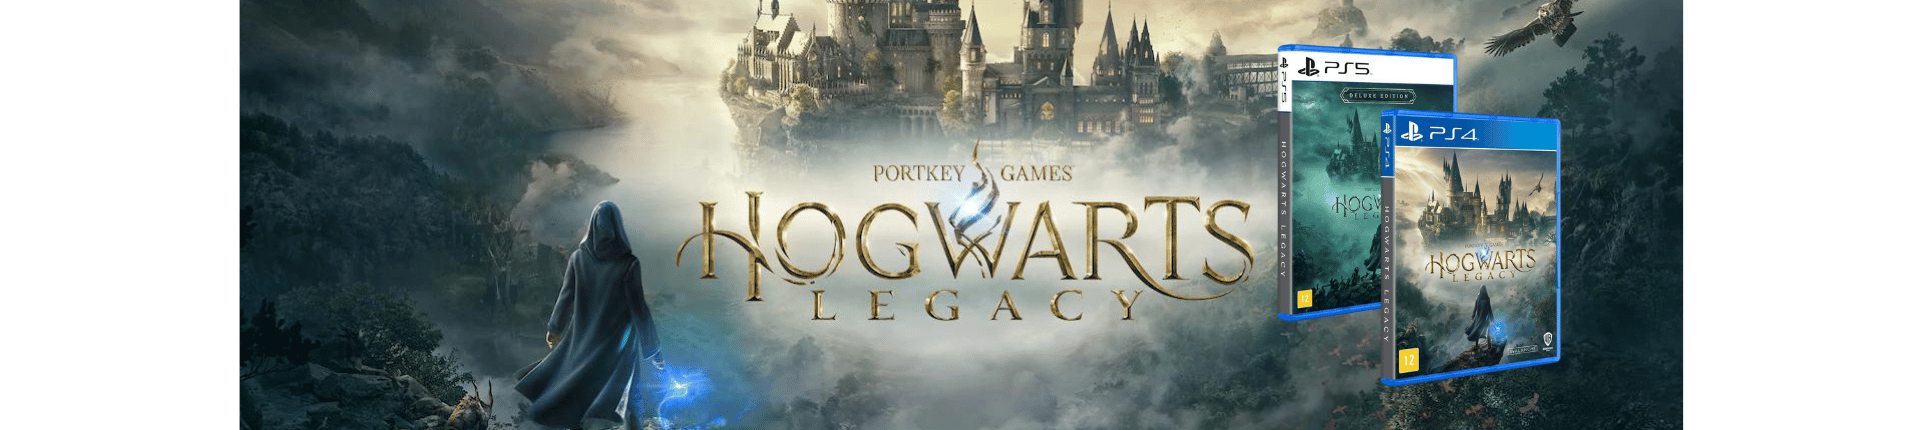 fullbanner hogwarts_legacy